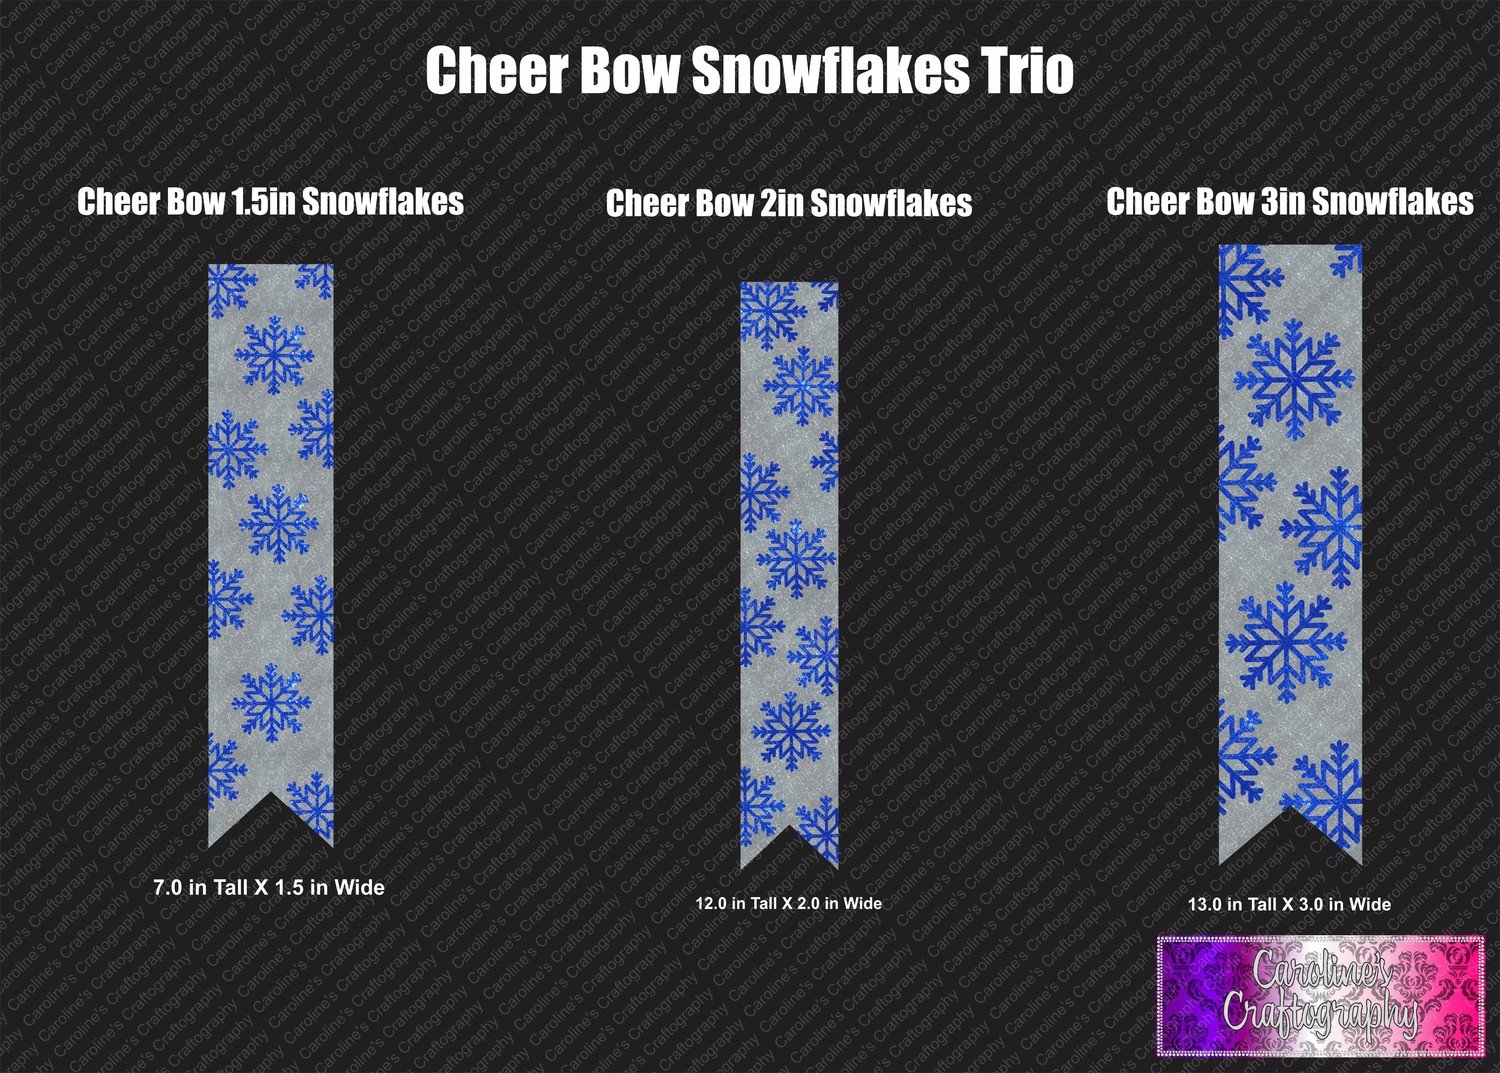 Snowflakes Trio Cheer Bow Vinyl